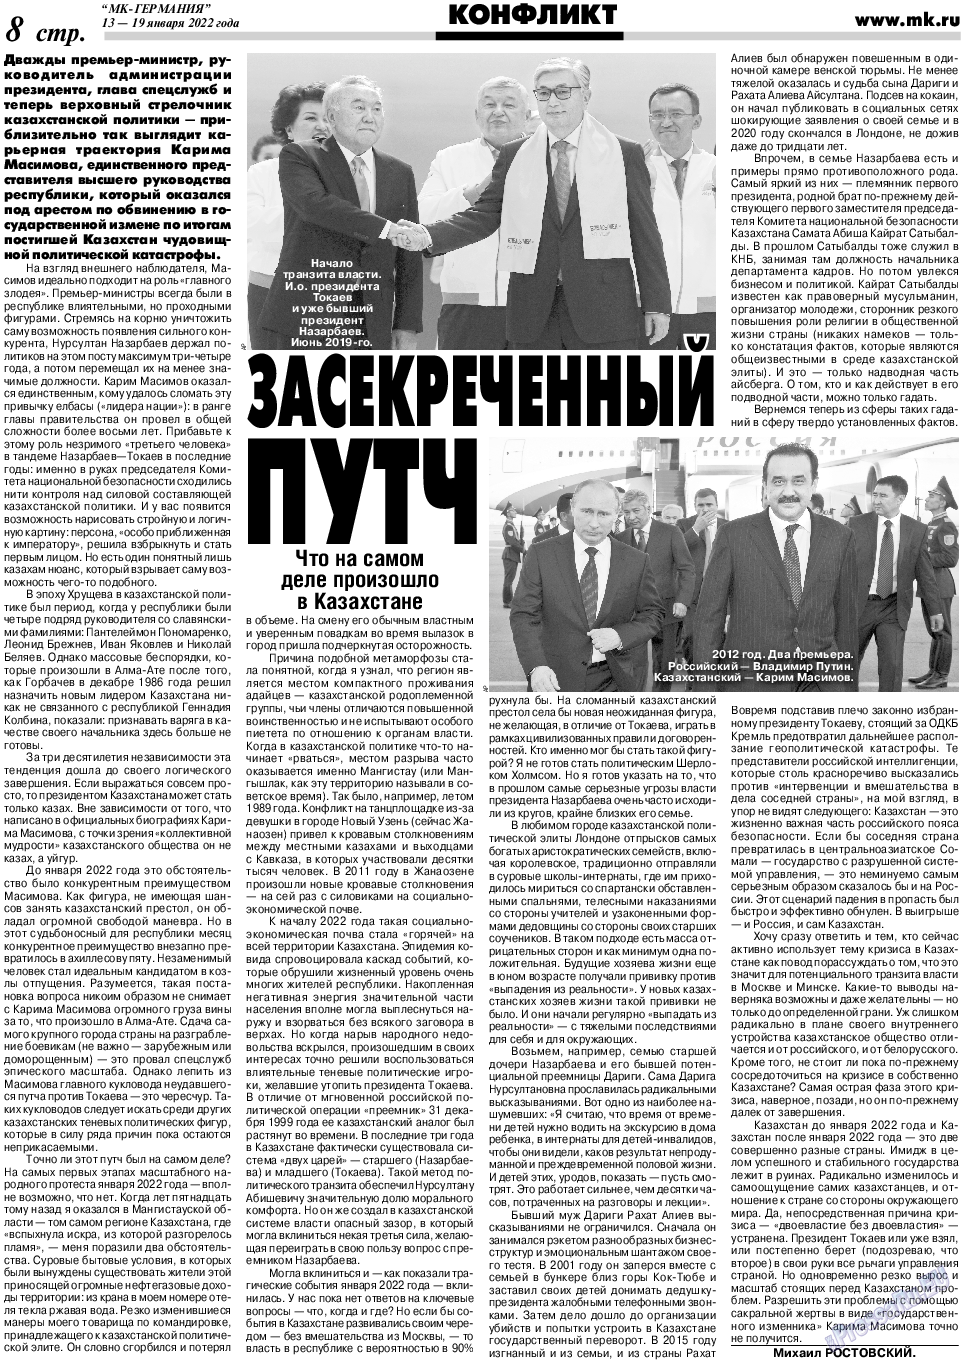 МК-Германия, газета. 2022 №3 стр.8